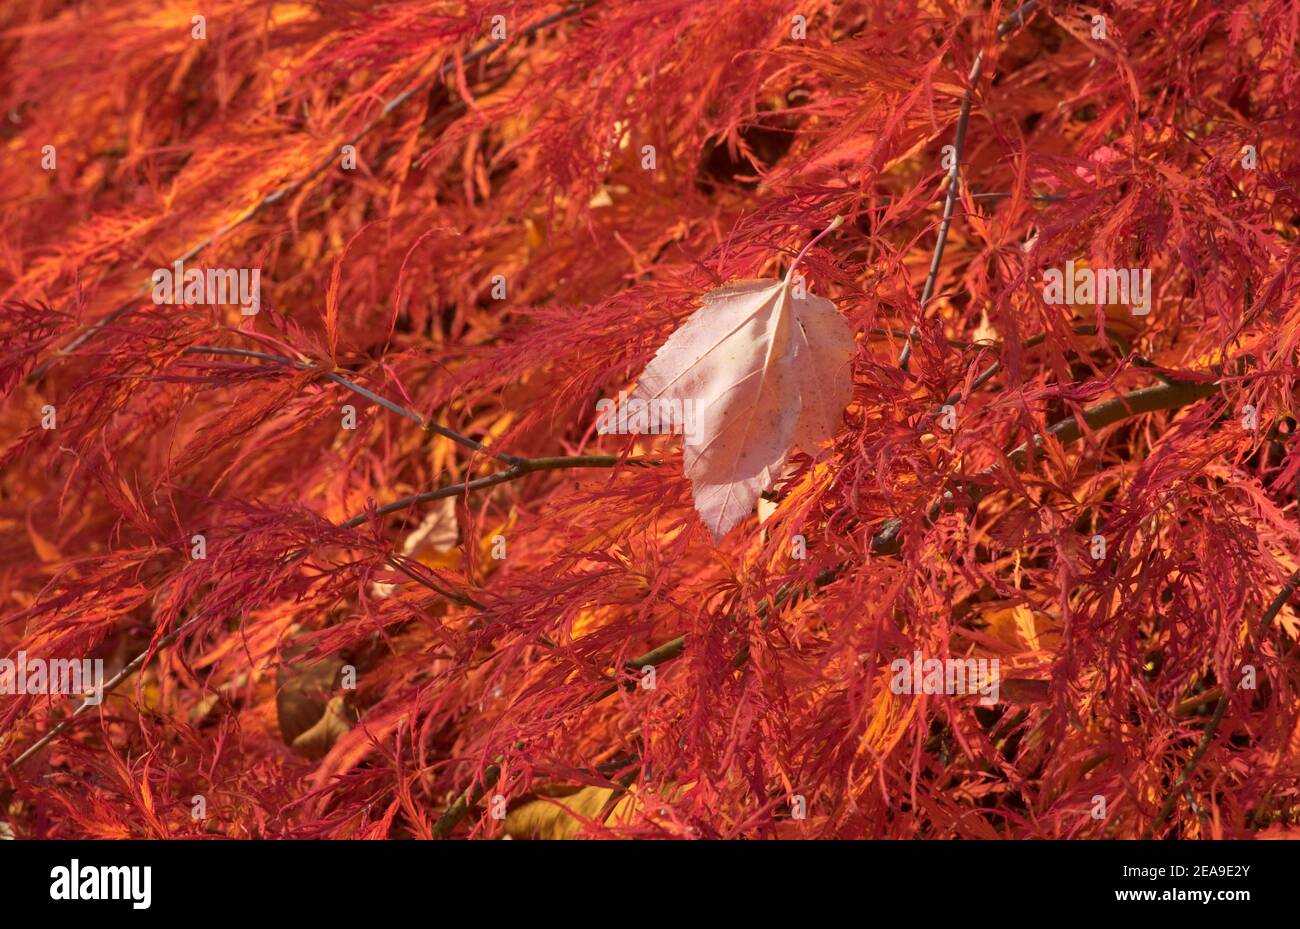 Europe, Germany, Hesse, Marburg, Botanical Garden of the Philipps University on the Lahn Mountains, red maple (Acer palmatum ornatum) in autumn leaves Stock Photo